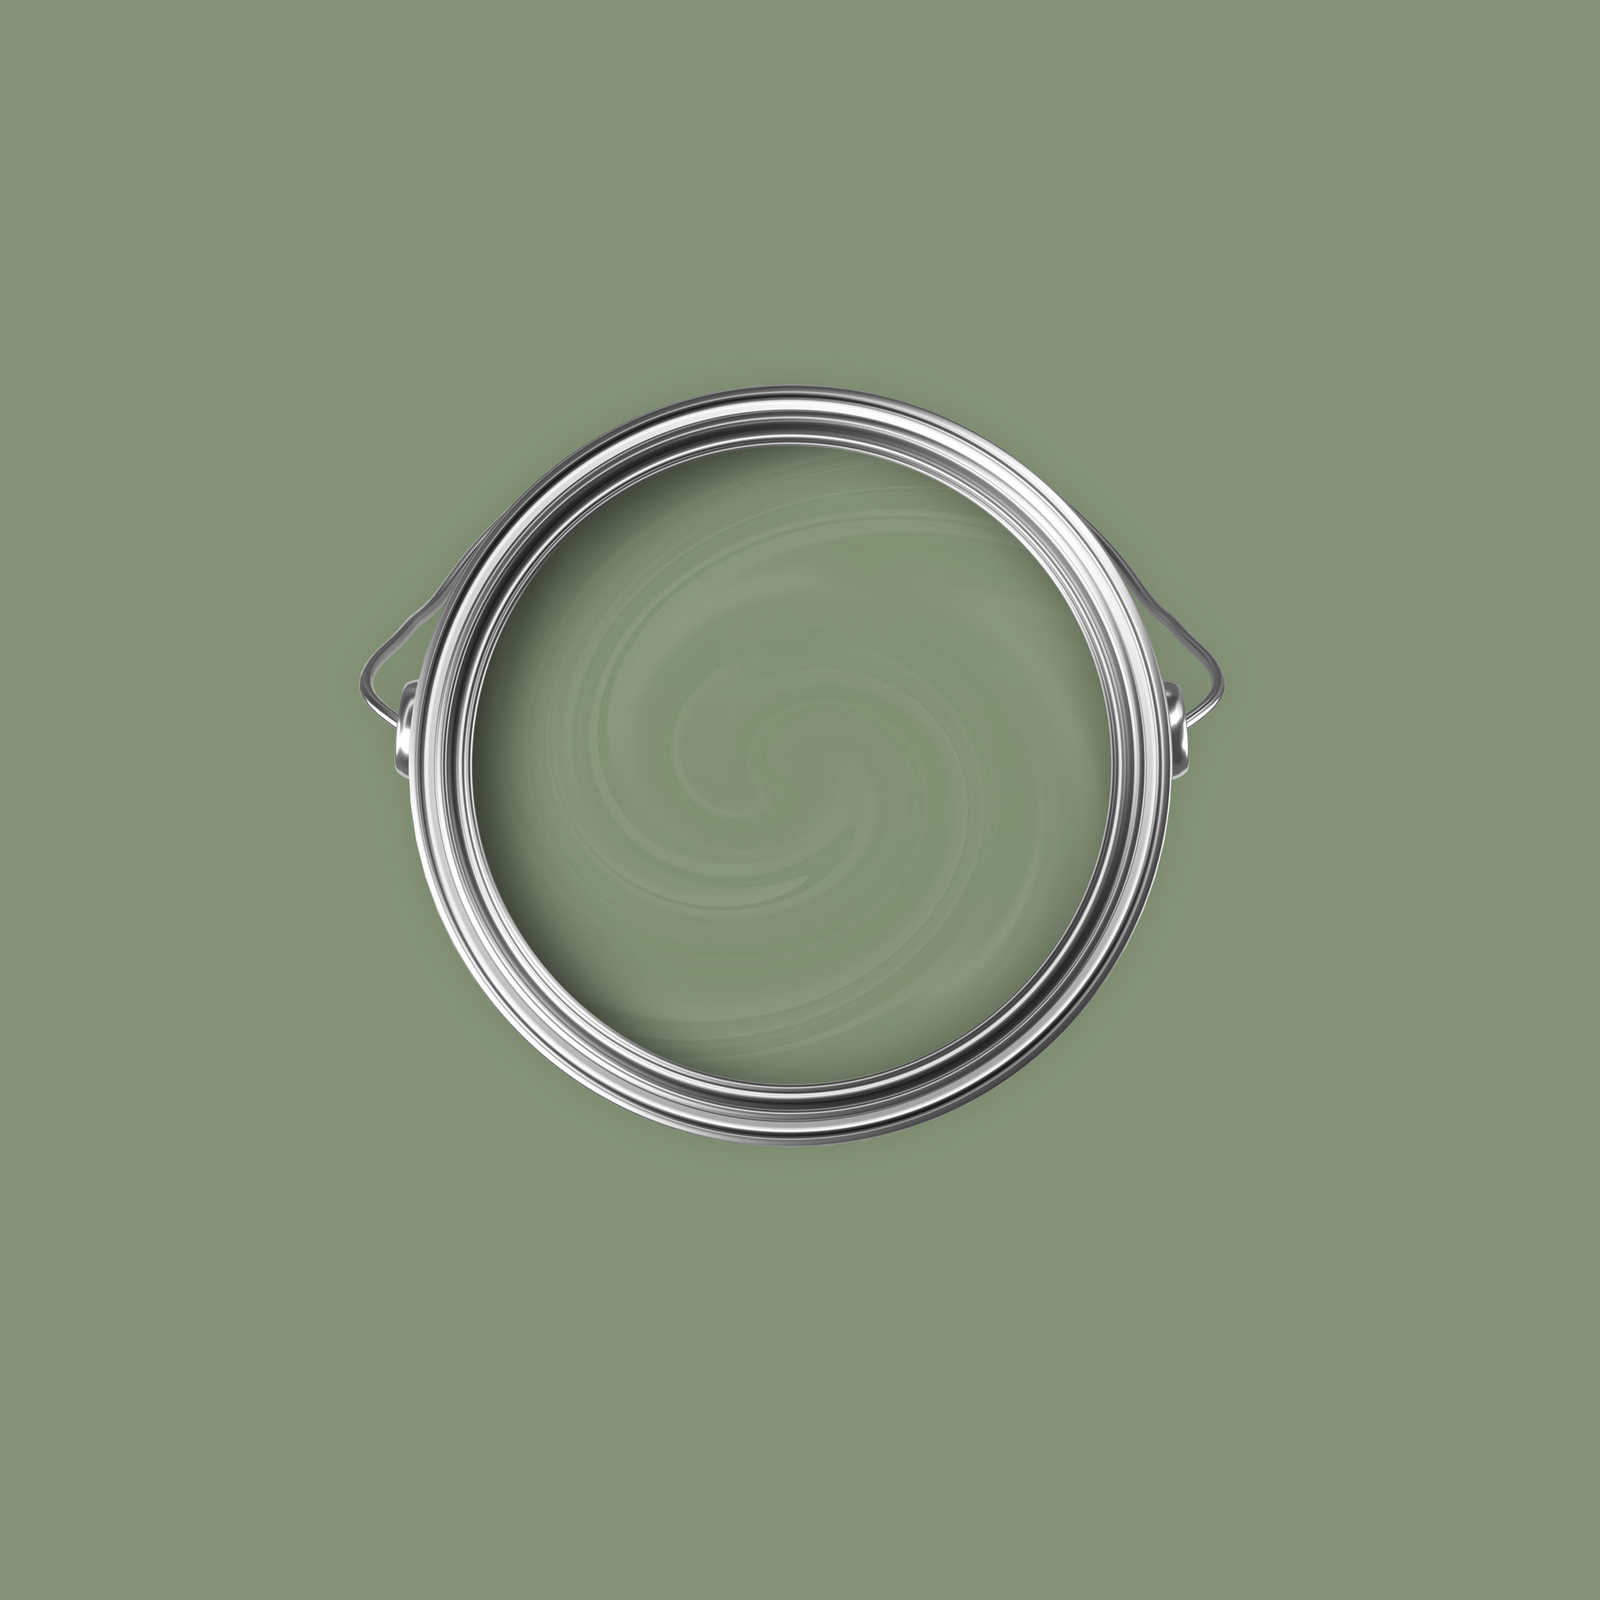             Premium Muurverf Naturel Olijfgroen »Gorgeous Green« NW503 – 2,5 Liter
        